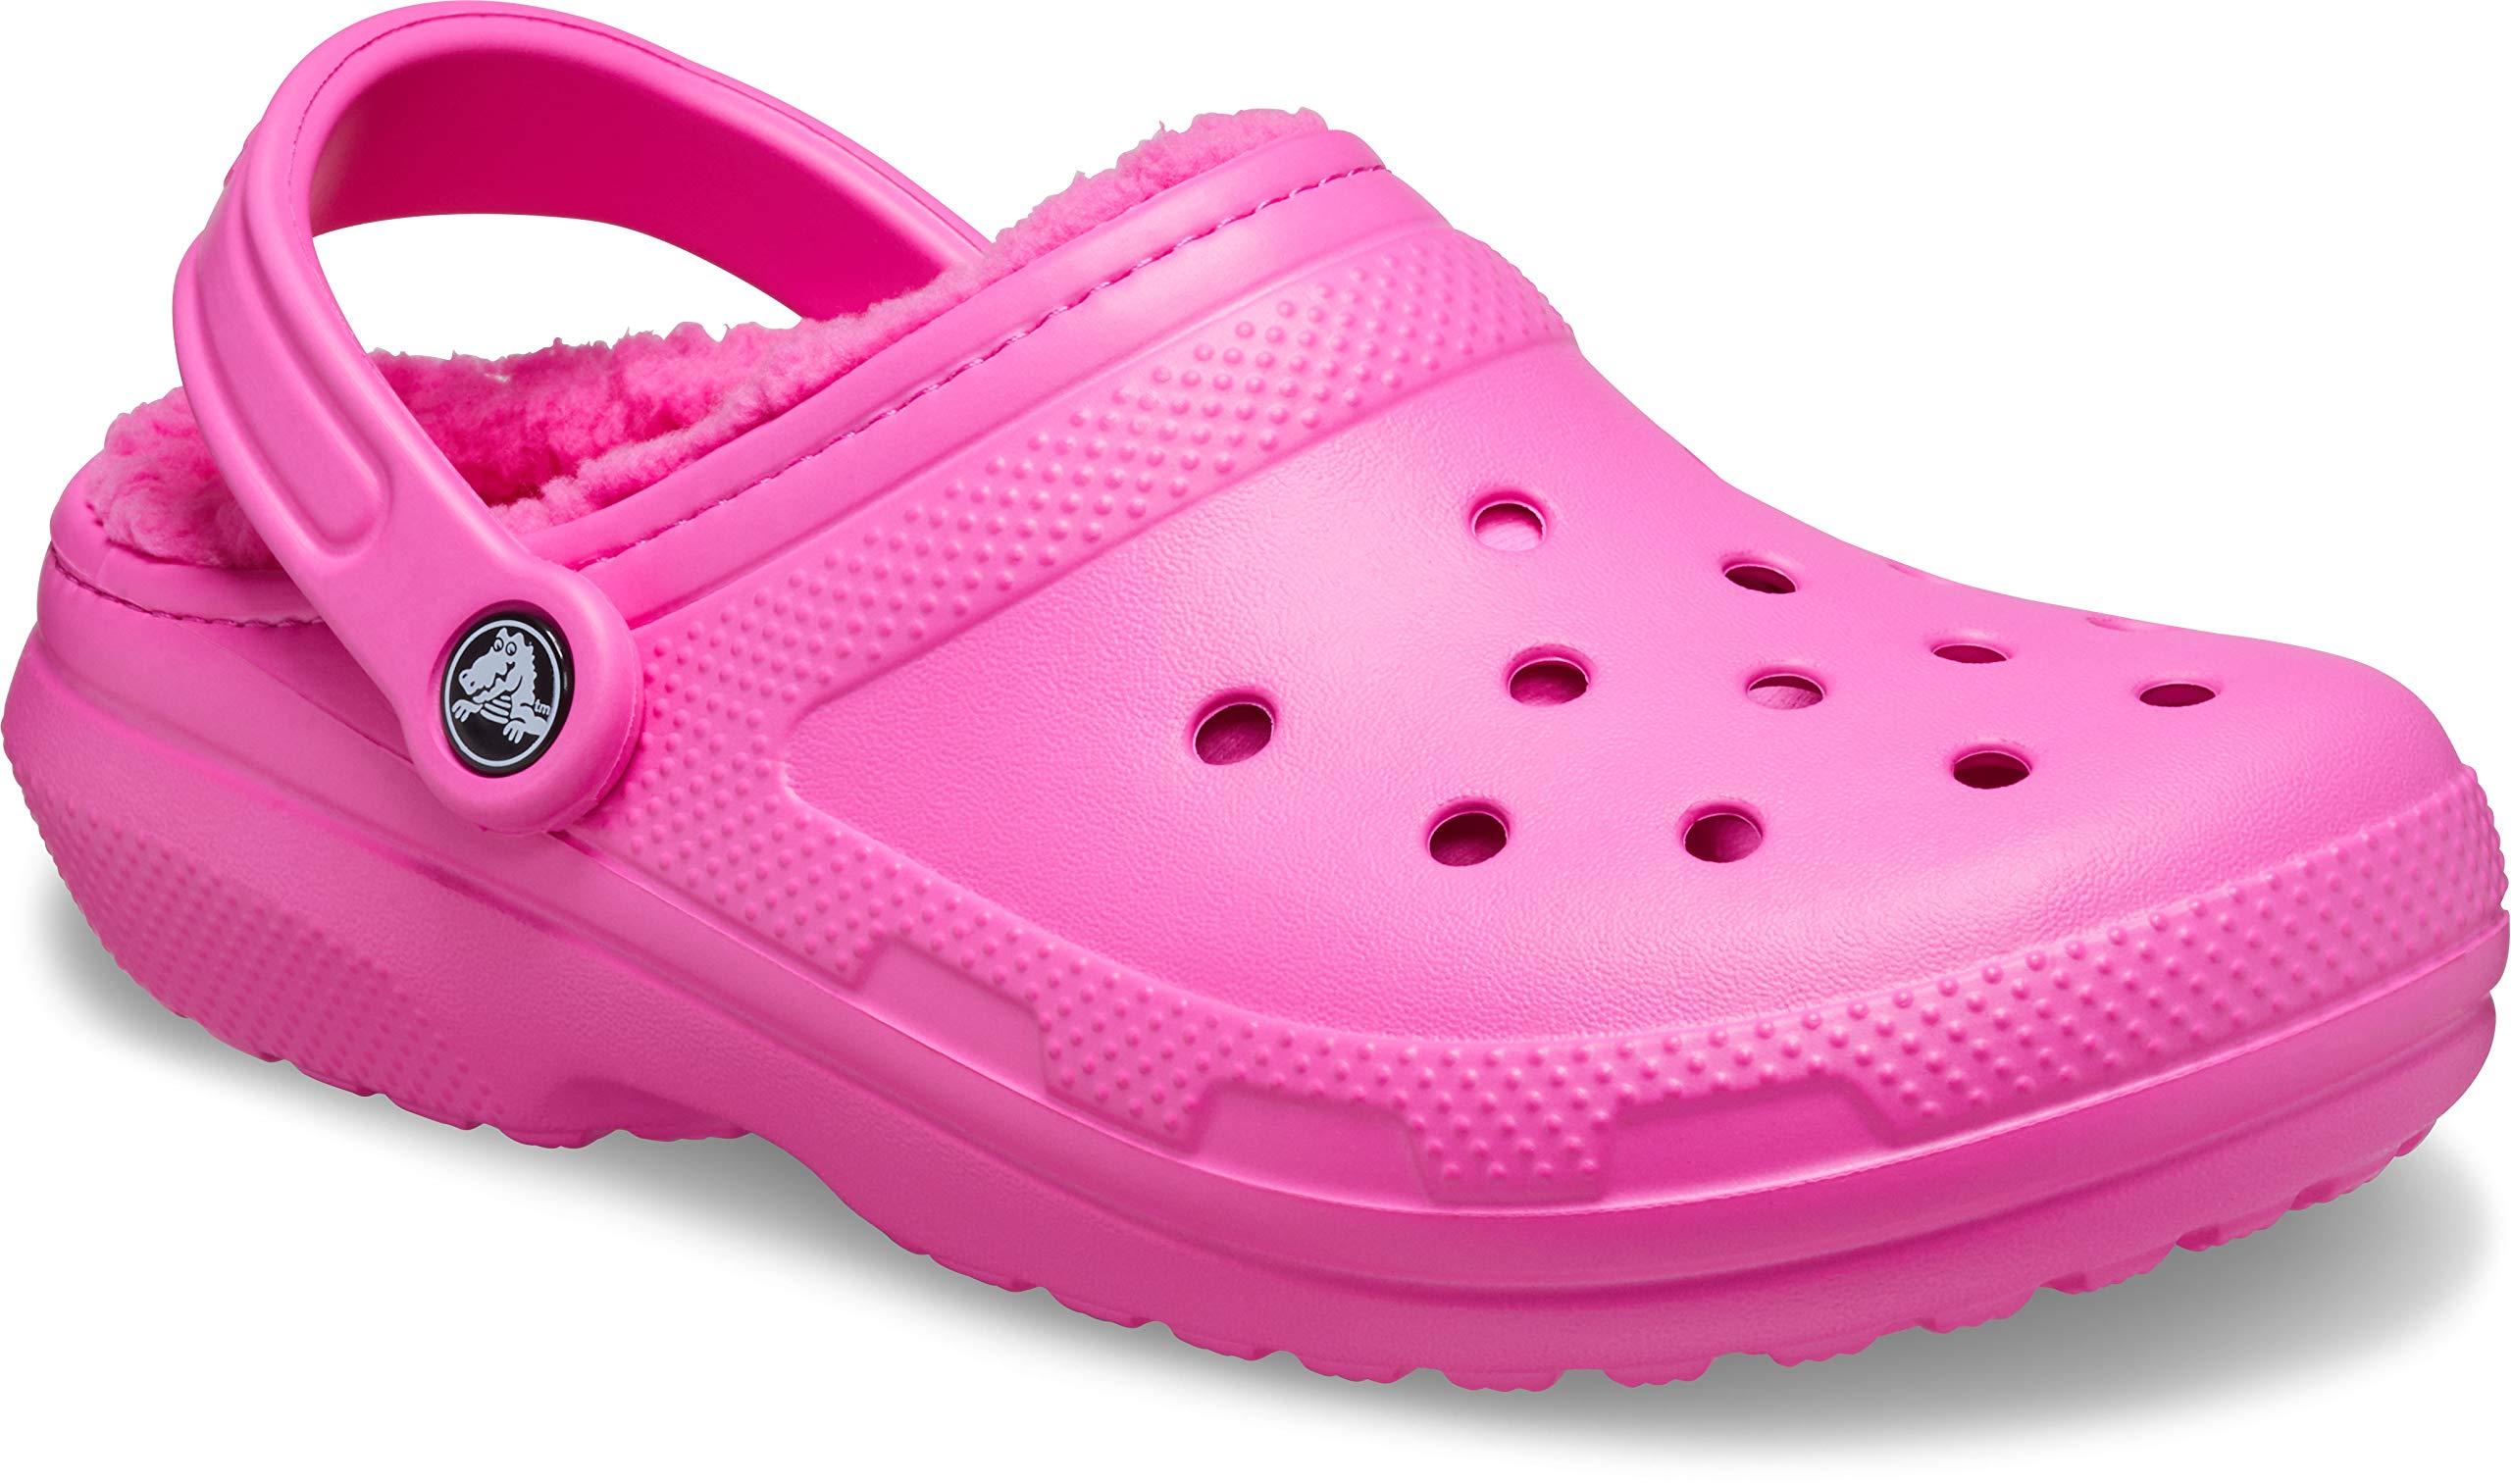 ballerina pink fuzz lined crocs